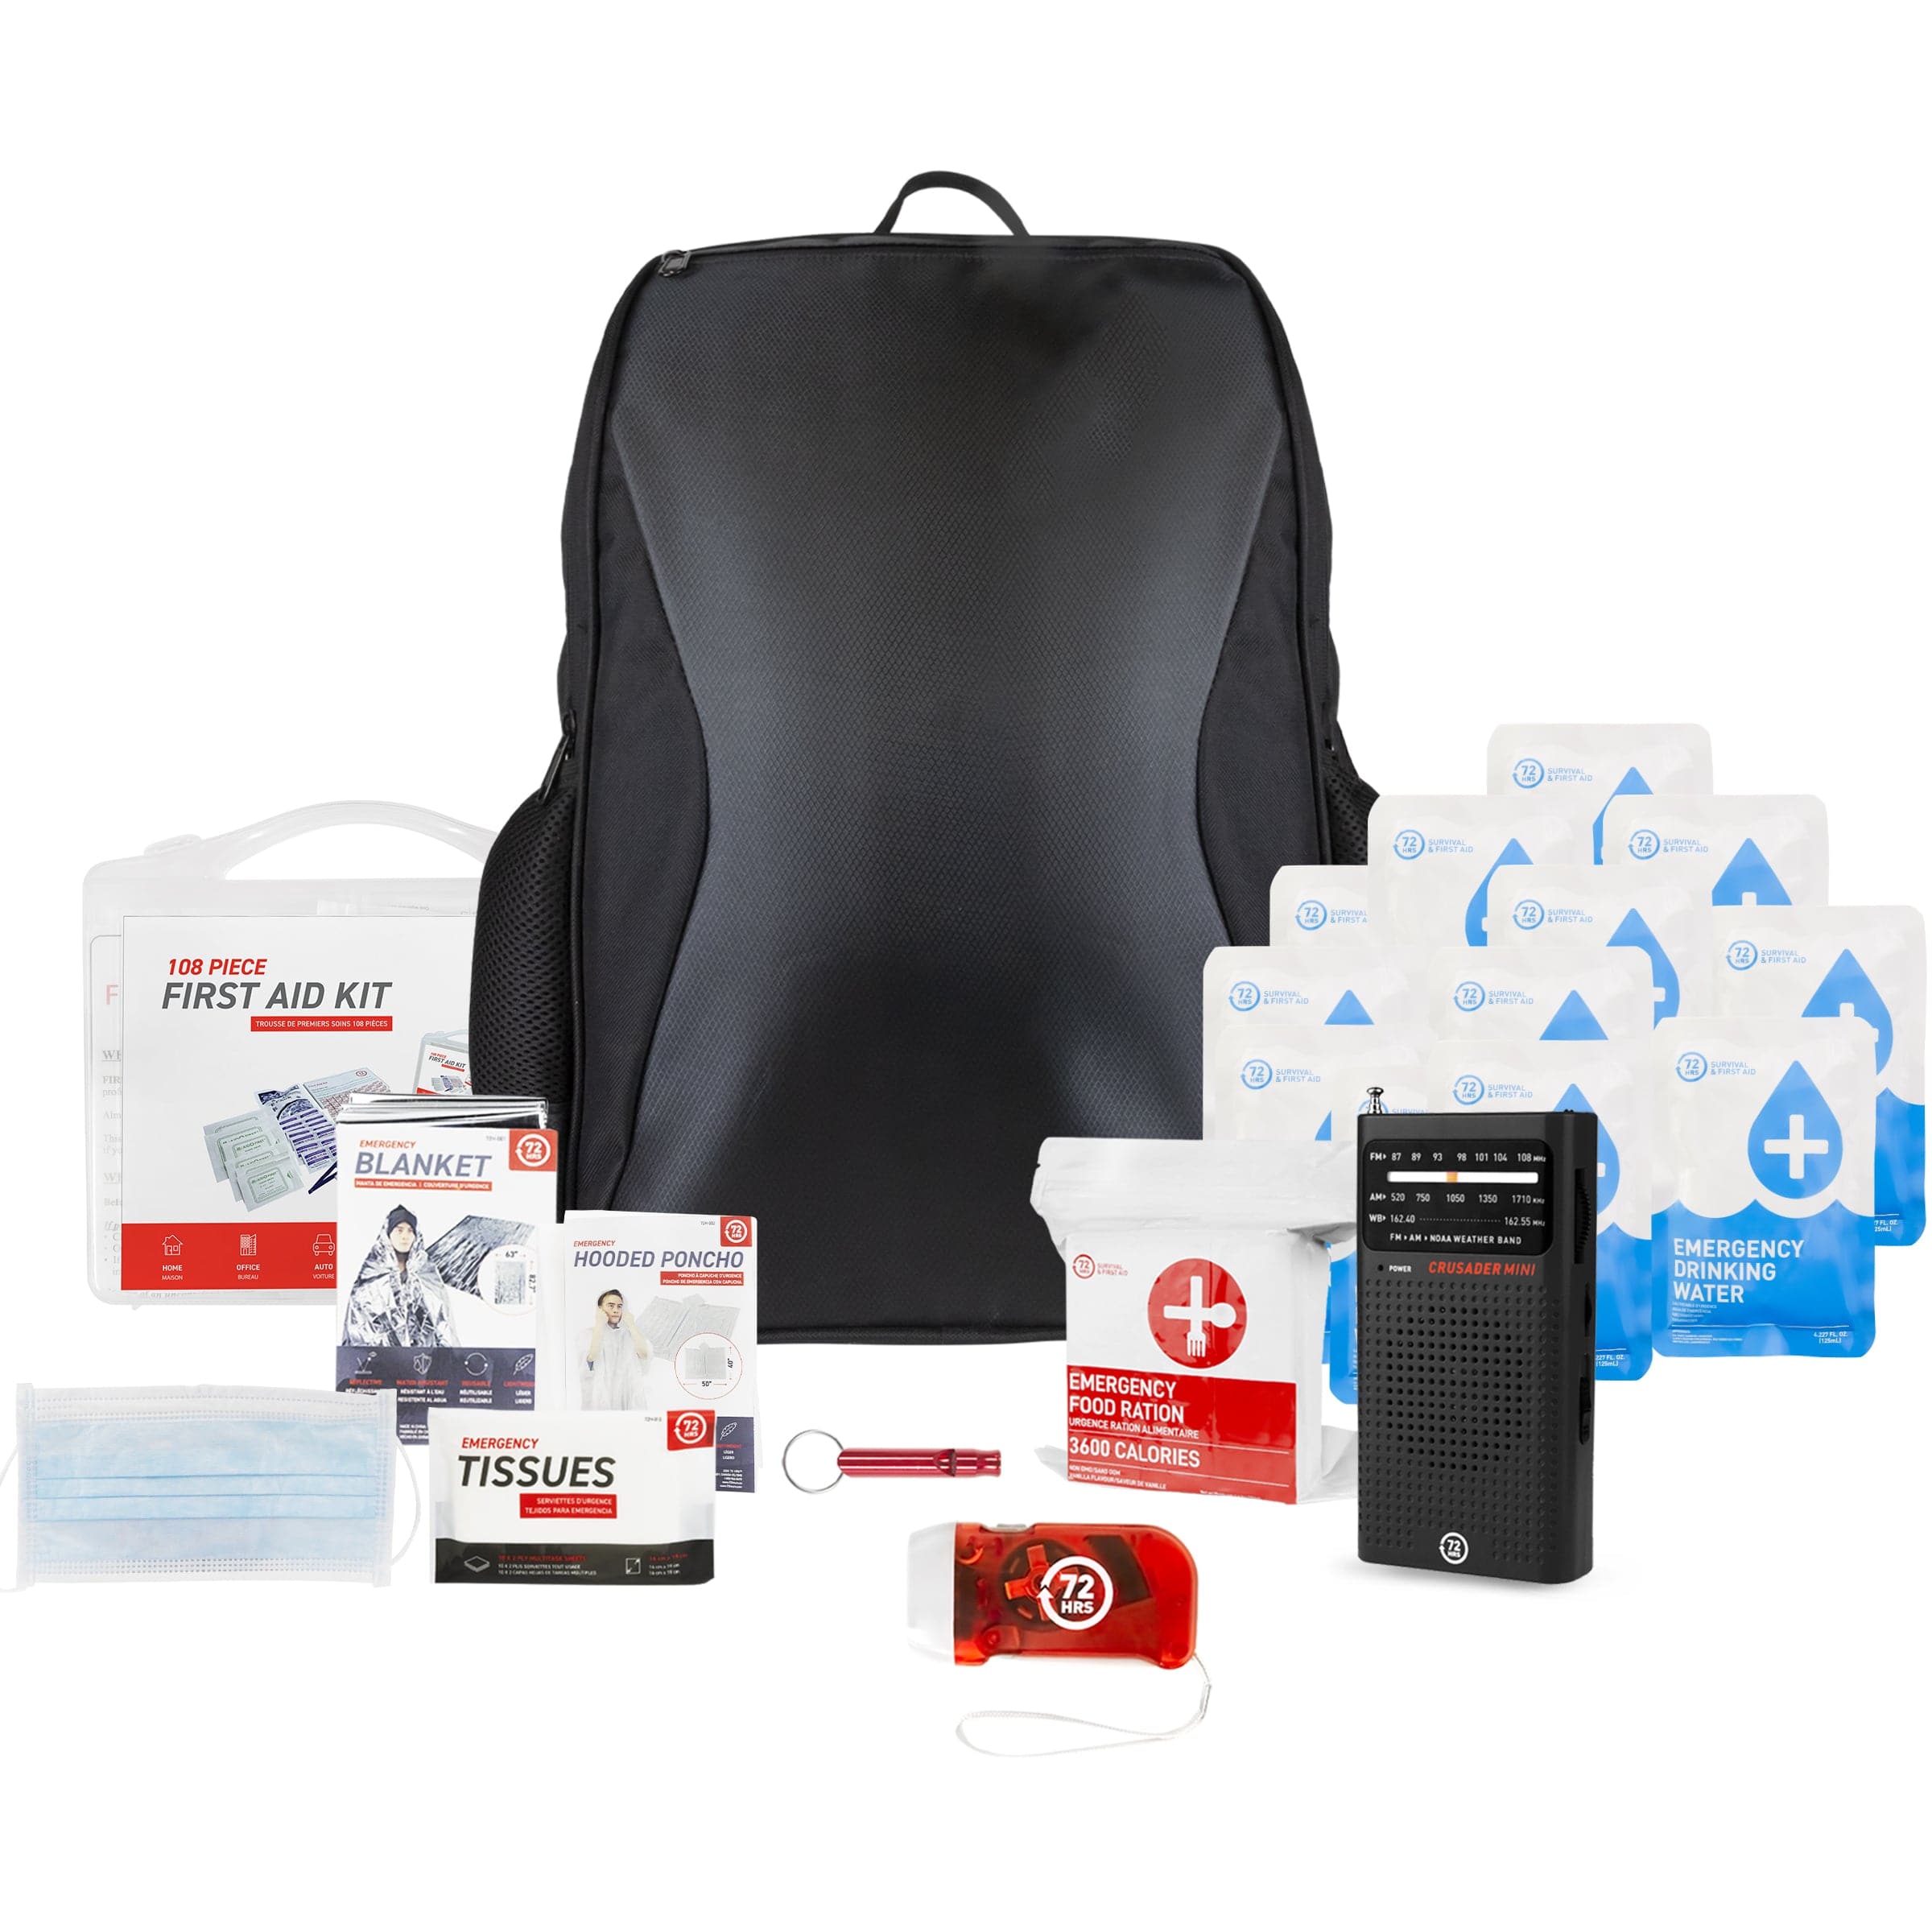 72HRS Essential Backpack Emergency Survival Kit - 1 Person, Black